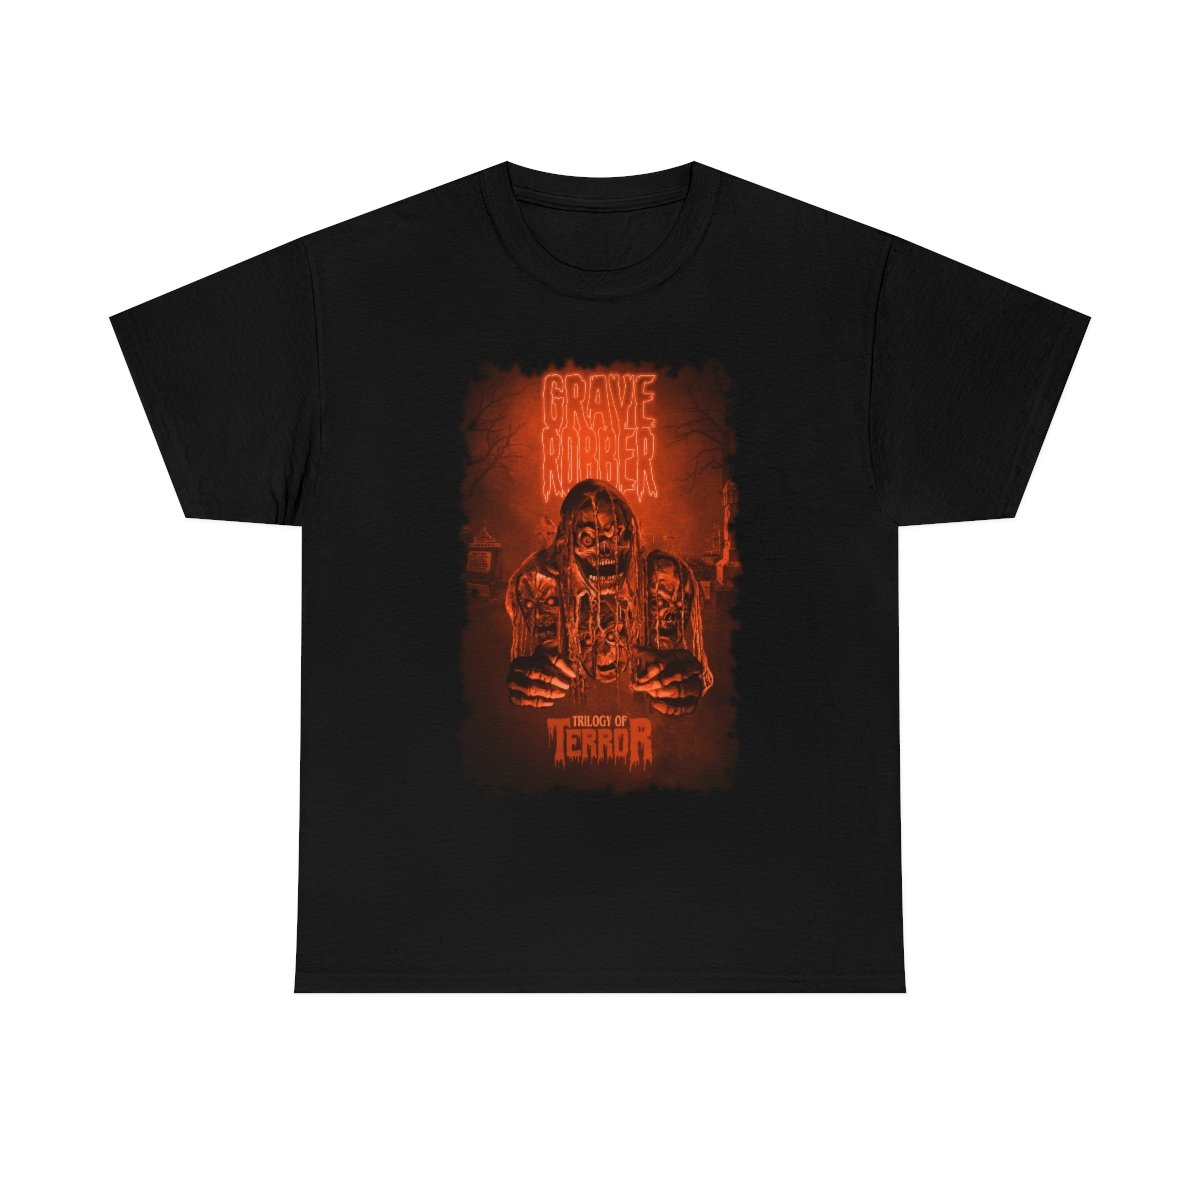 Grave Robber Trilogy of Terror (Limited Edition Orange) Short Sleeve Tshirt (5000)